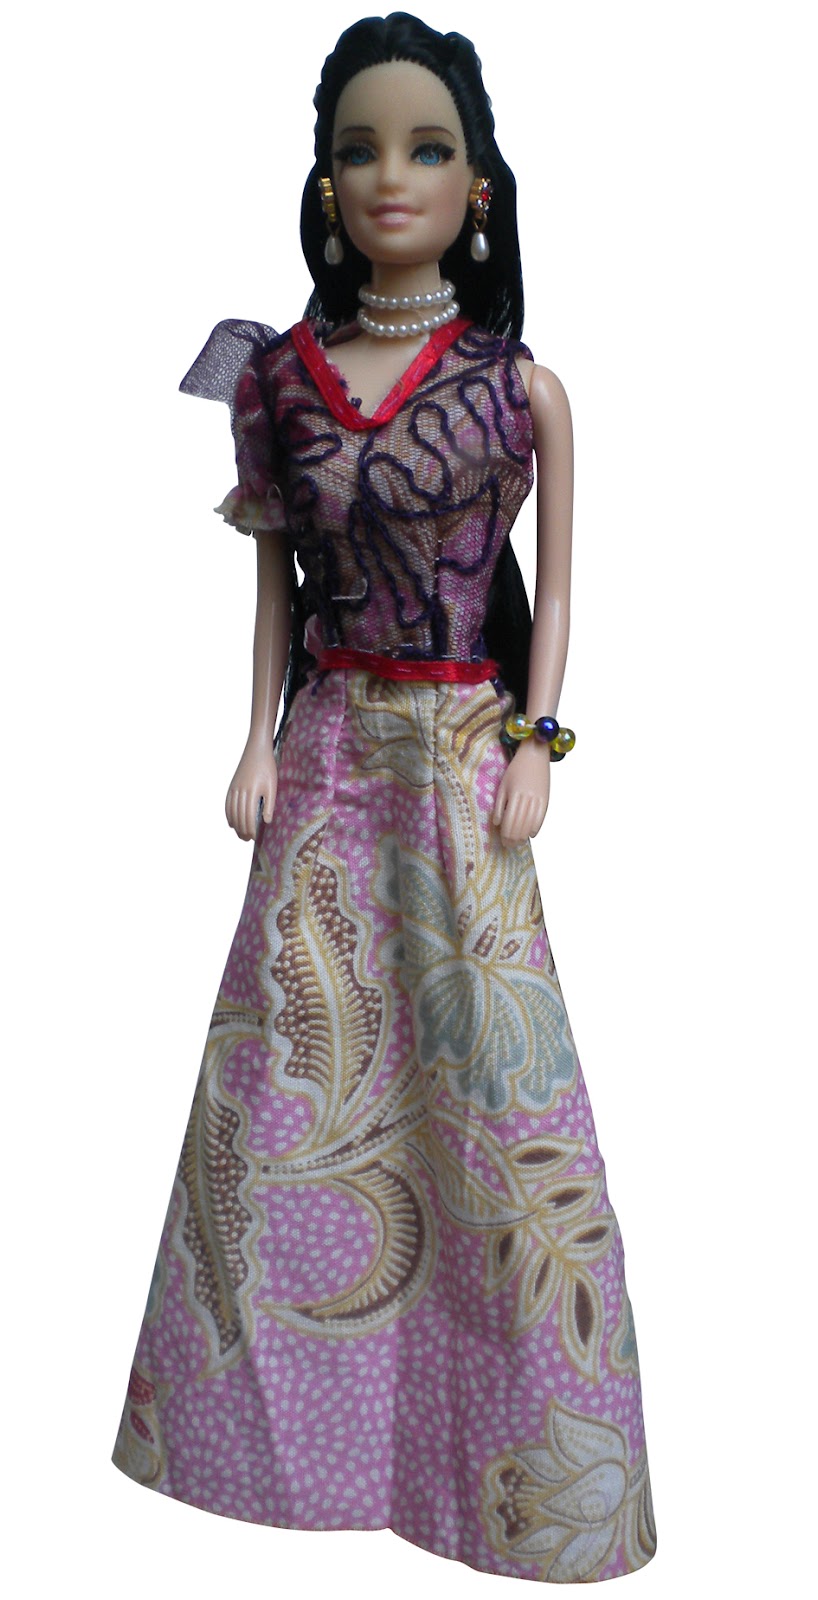  Gaun  Batik newhairstylesformen2014 com